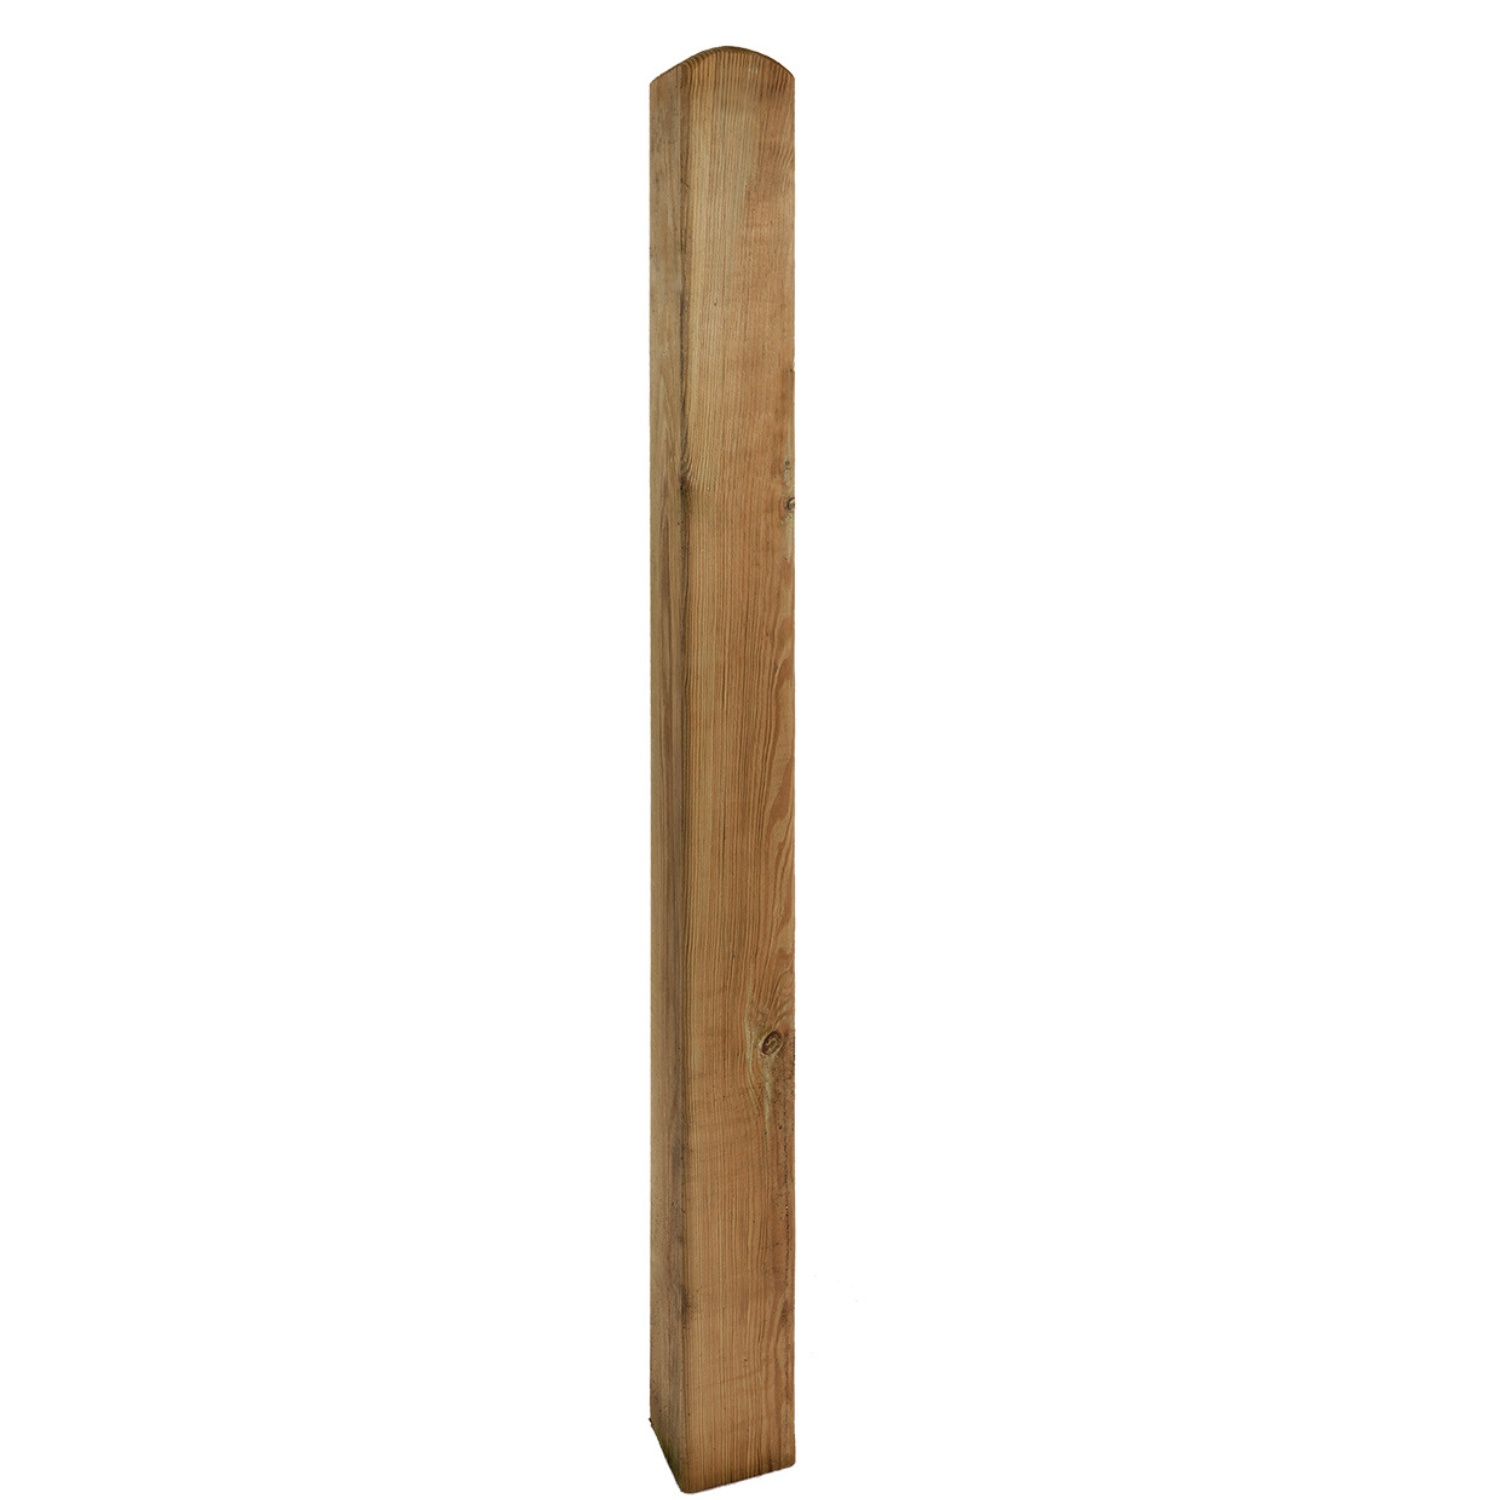 Holzpfosten 9cm x 9cm x 90cm mit Rundkopf KDI-grün Kantholz